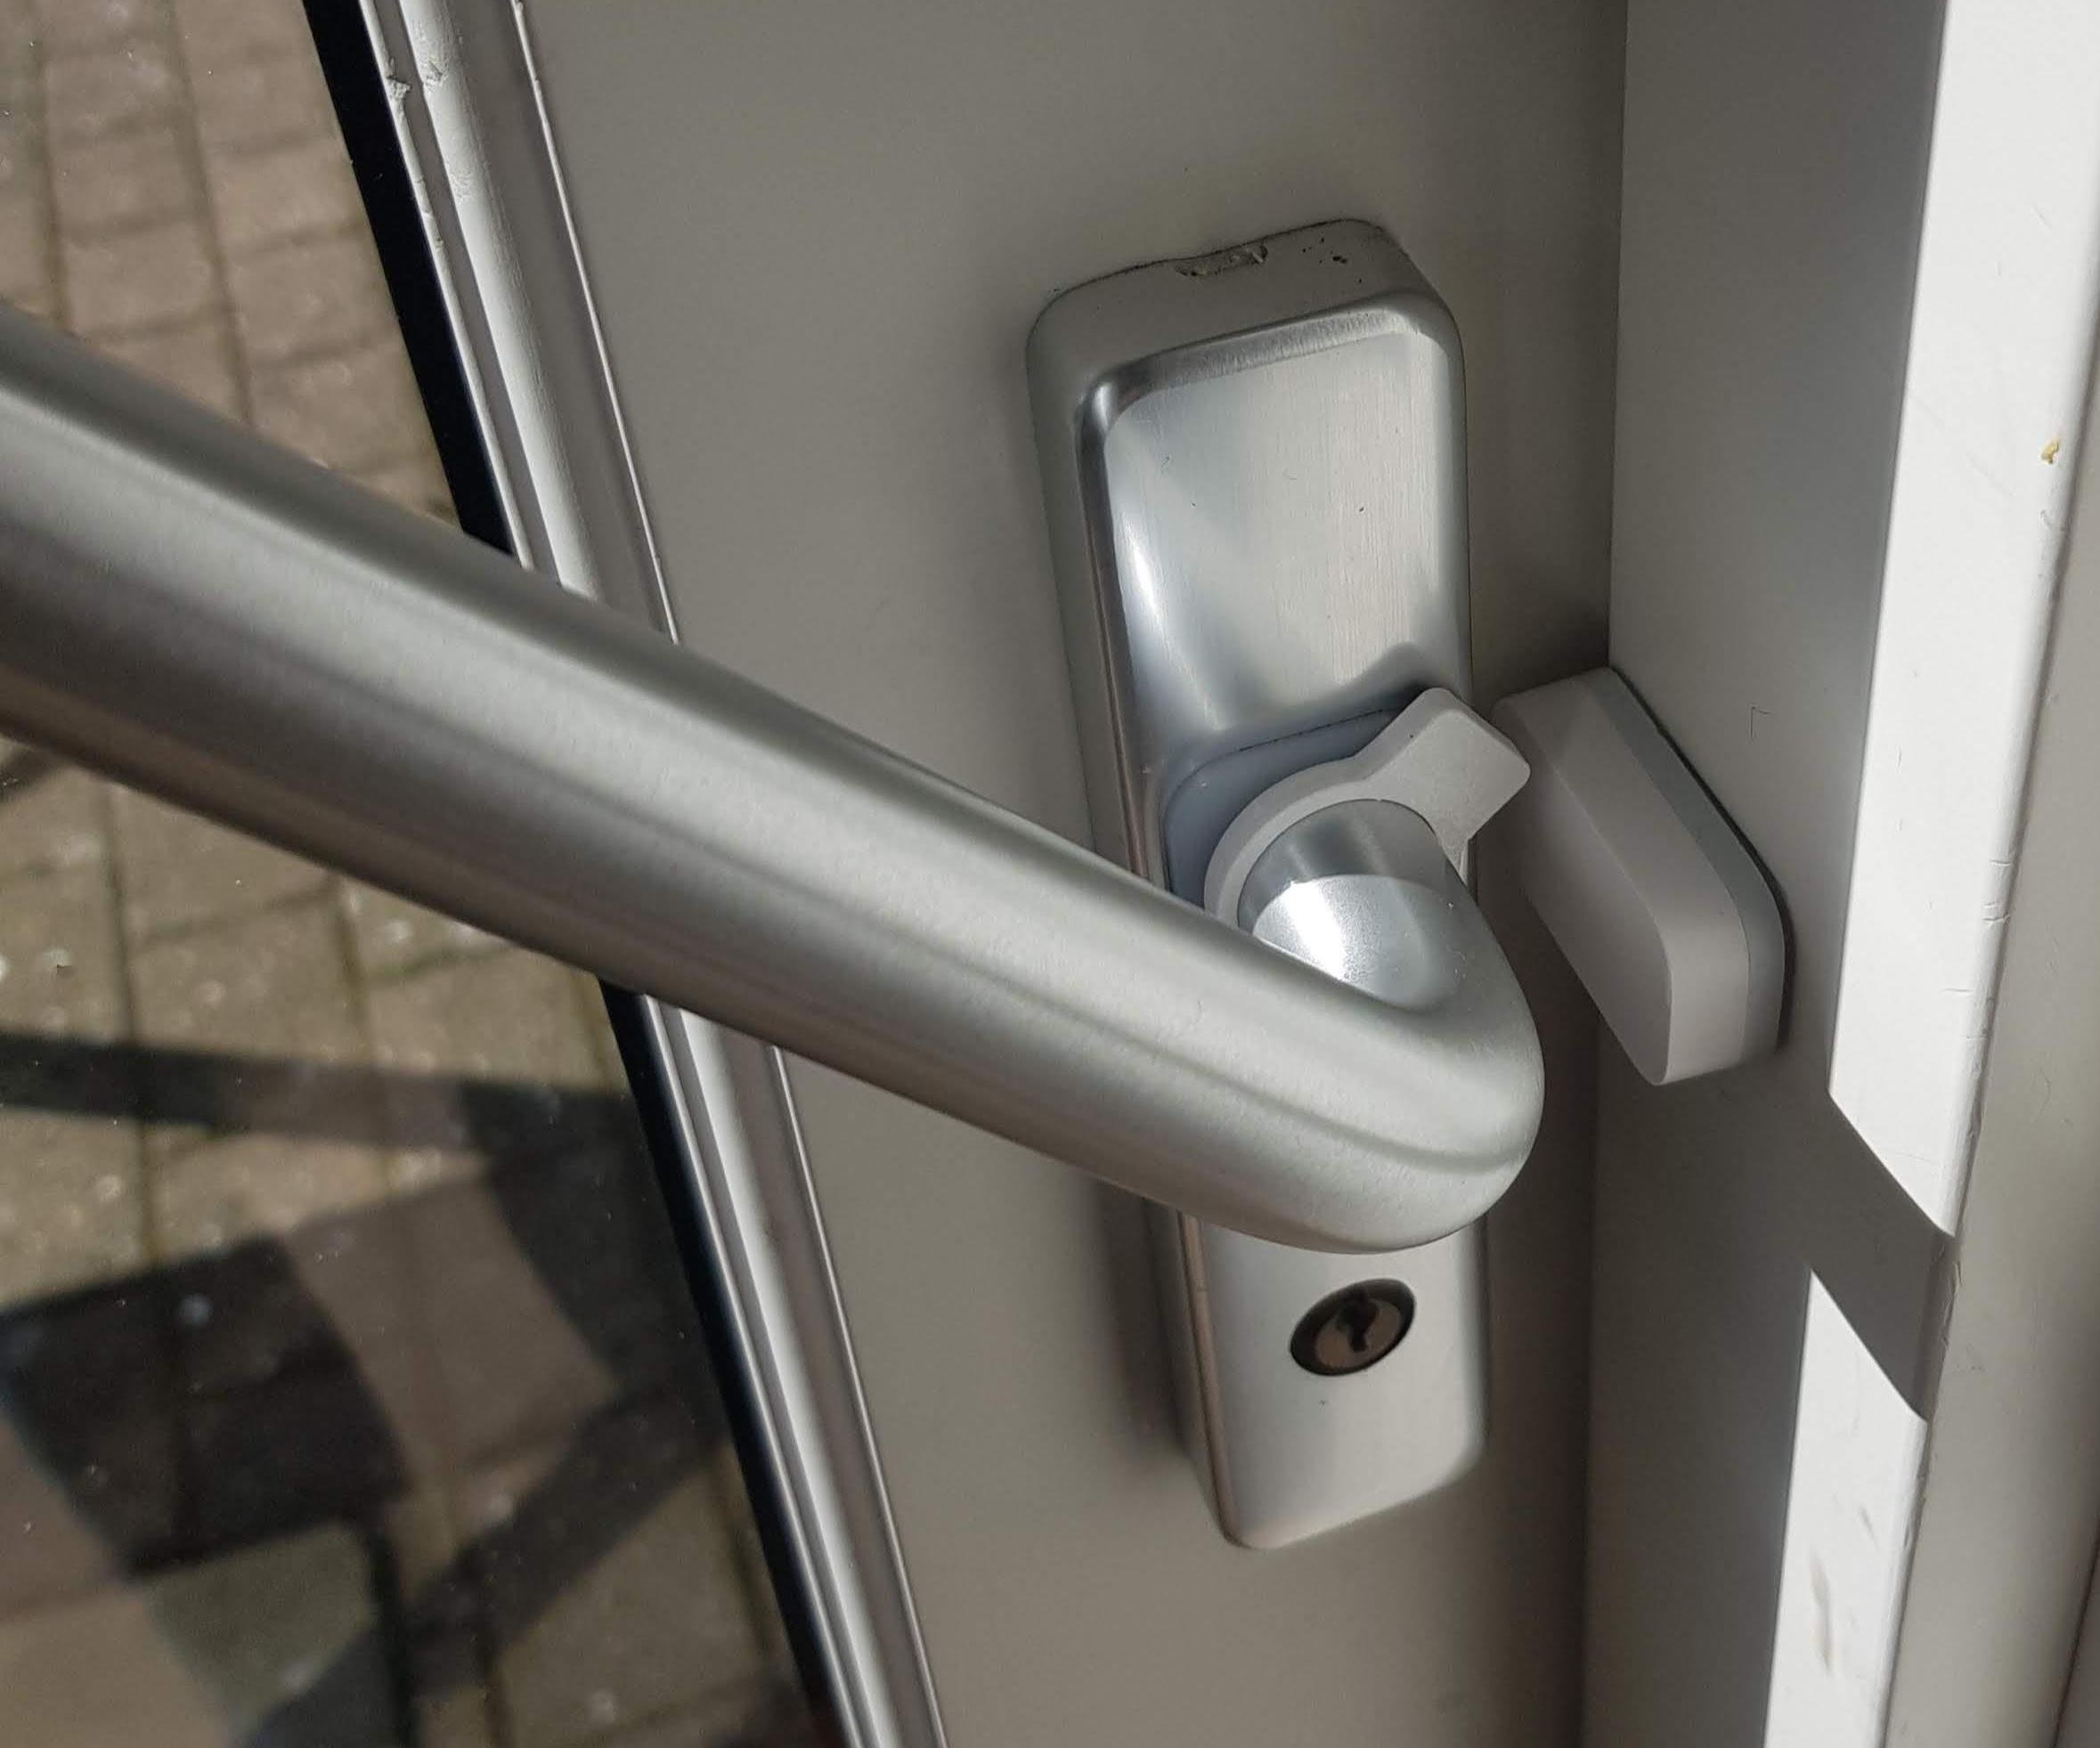 Doors- and Windows Locked/Unlocked Sensors